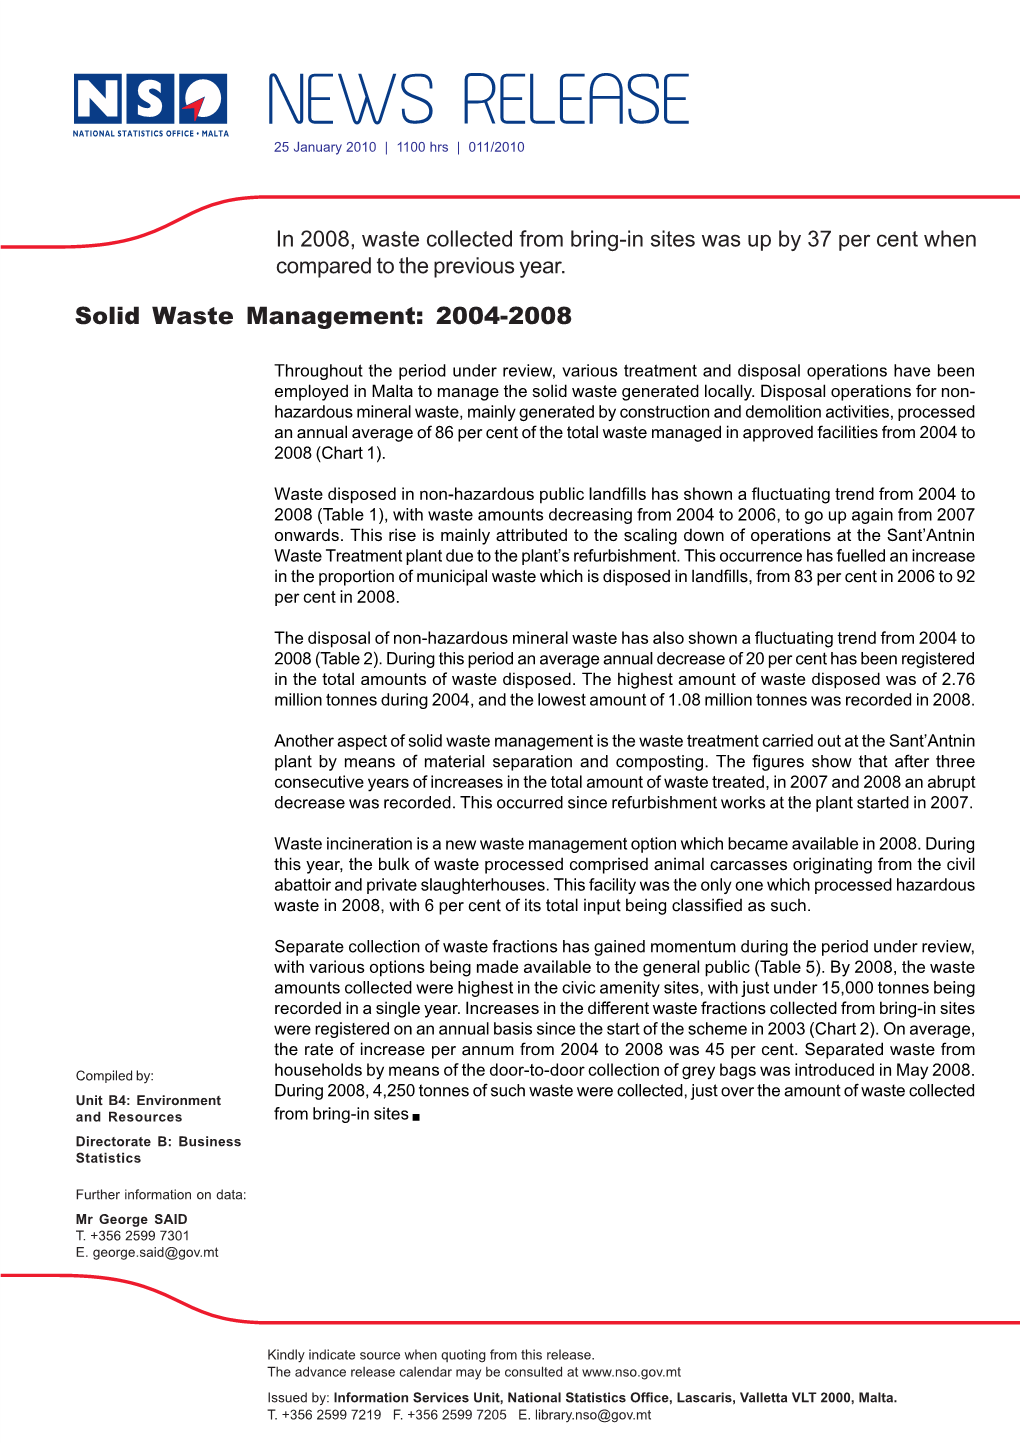 Solid Waste Management: 2004-2008